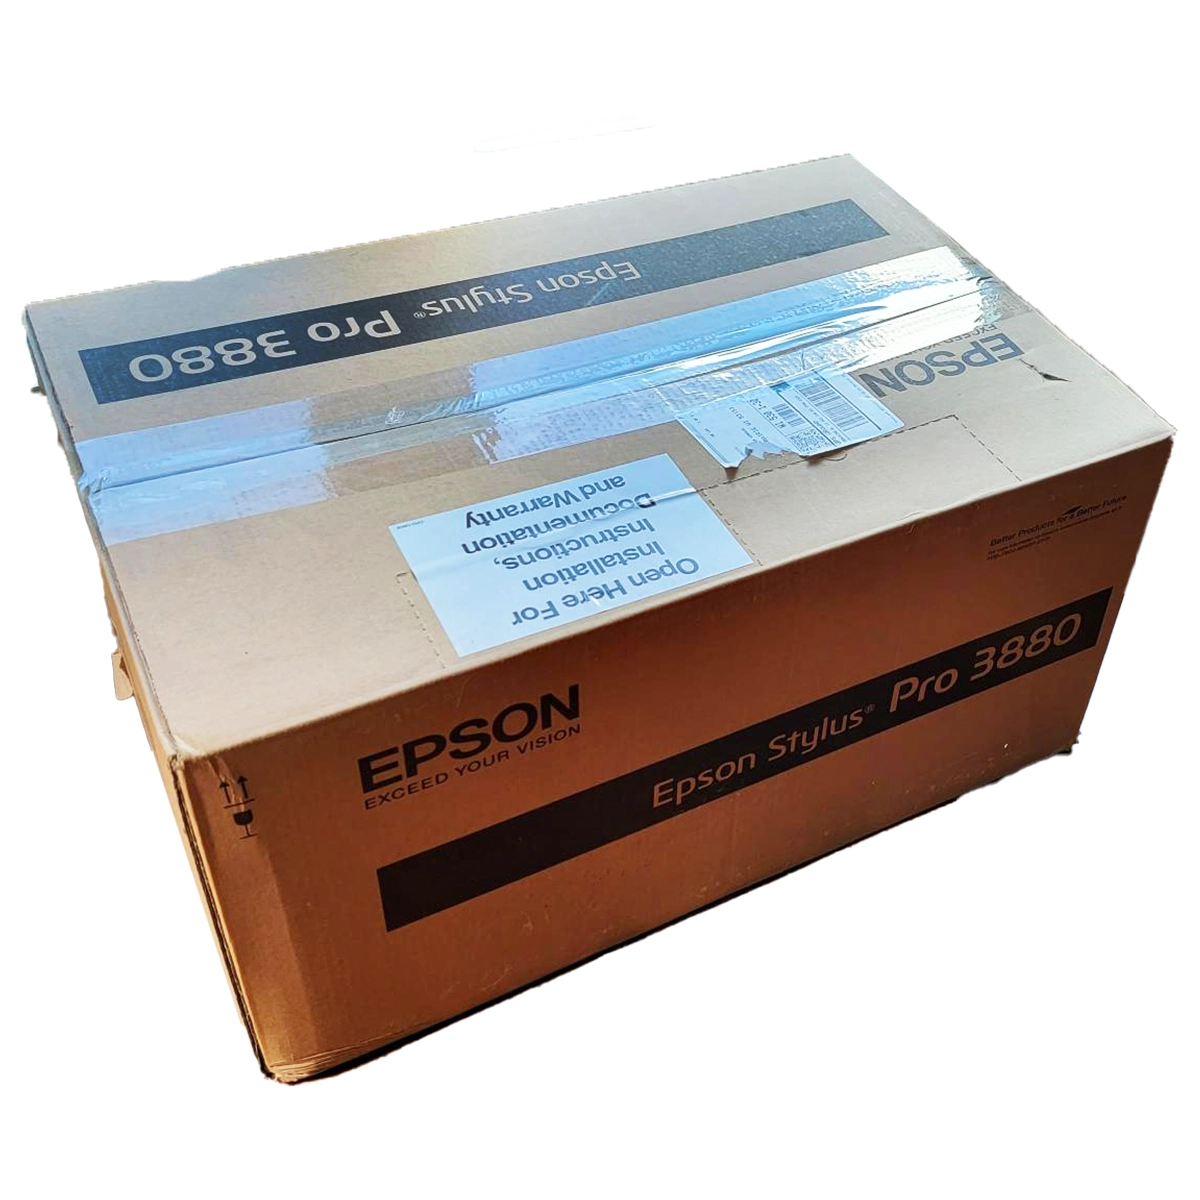 epson stylus pro 3880 printer new in box sealed